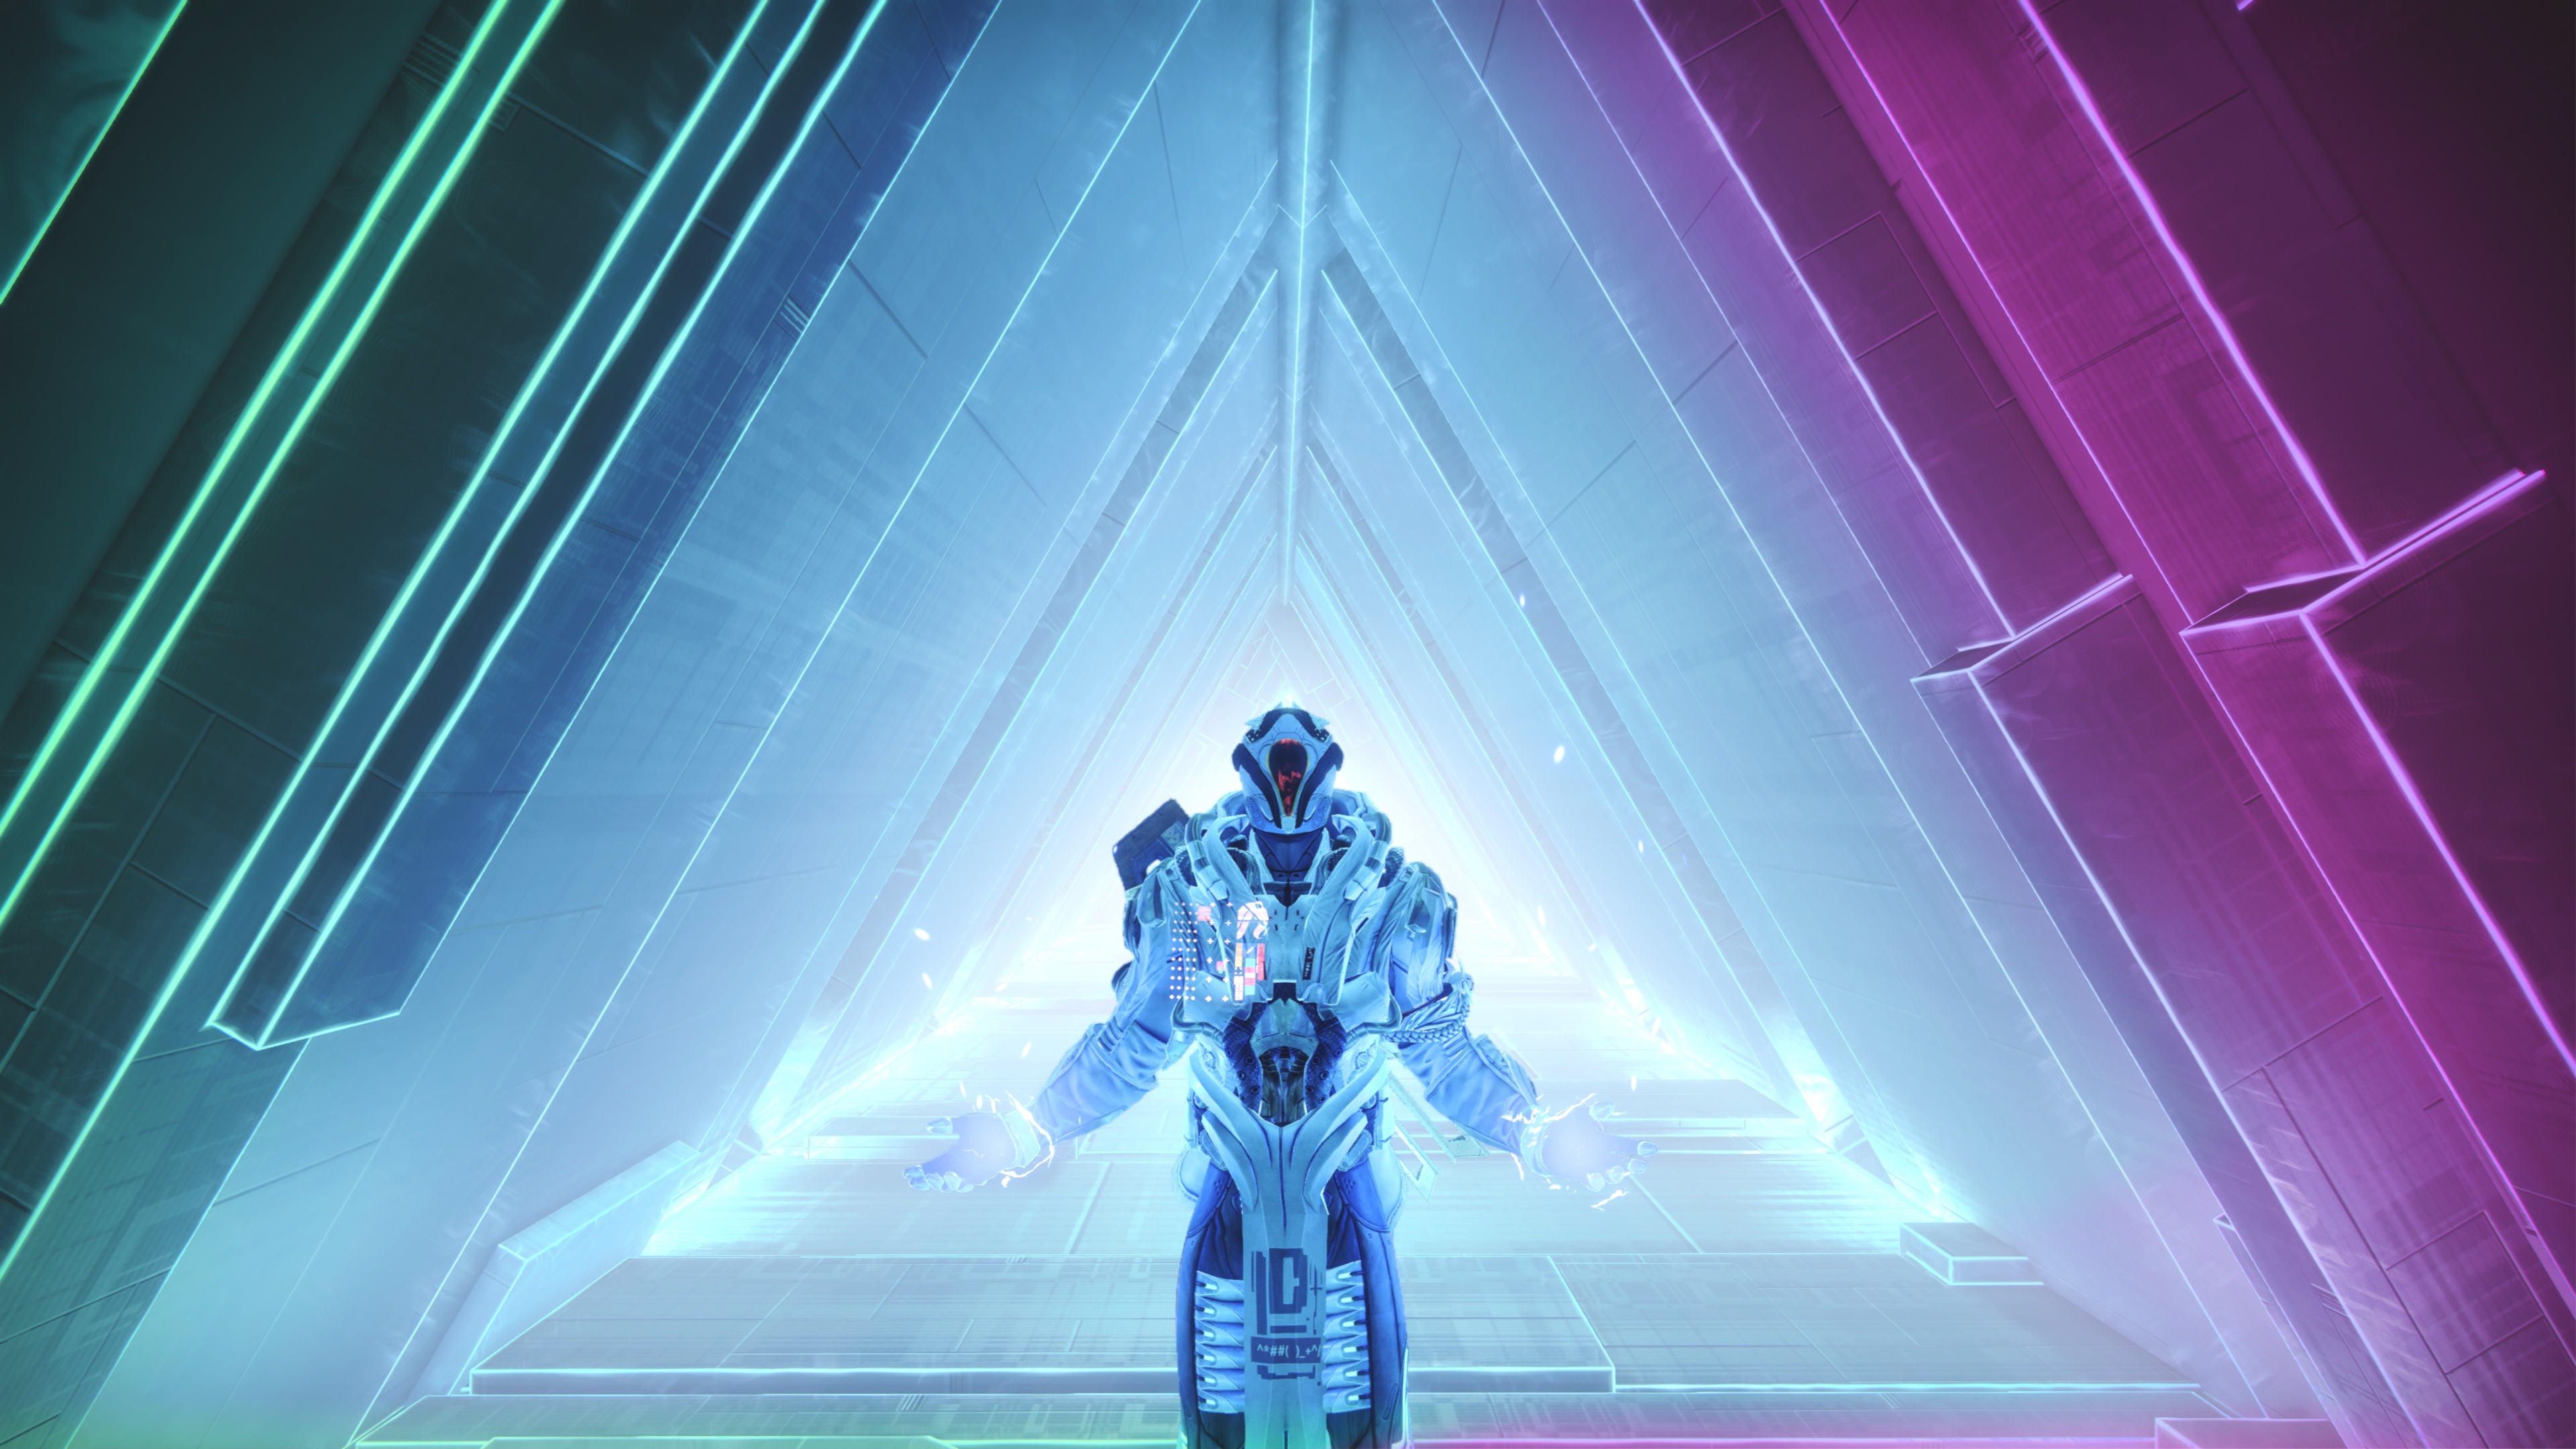 Destiny 2 Neon Warlock Wallpaper by AllanZax on DeviantArt